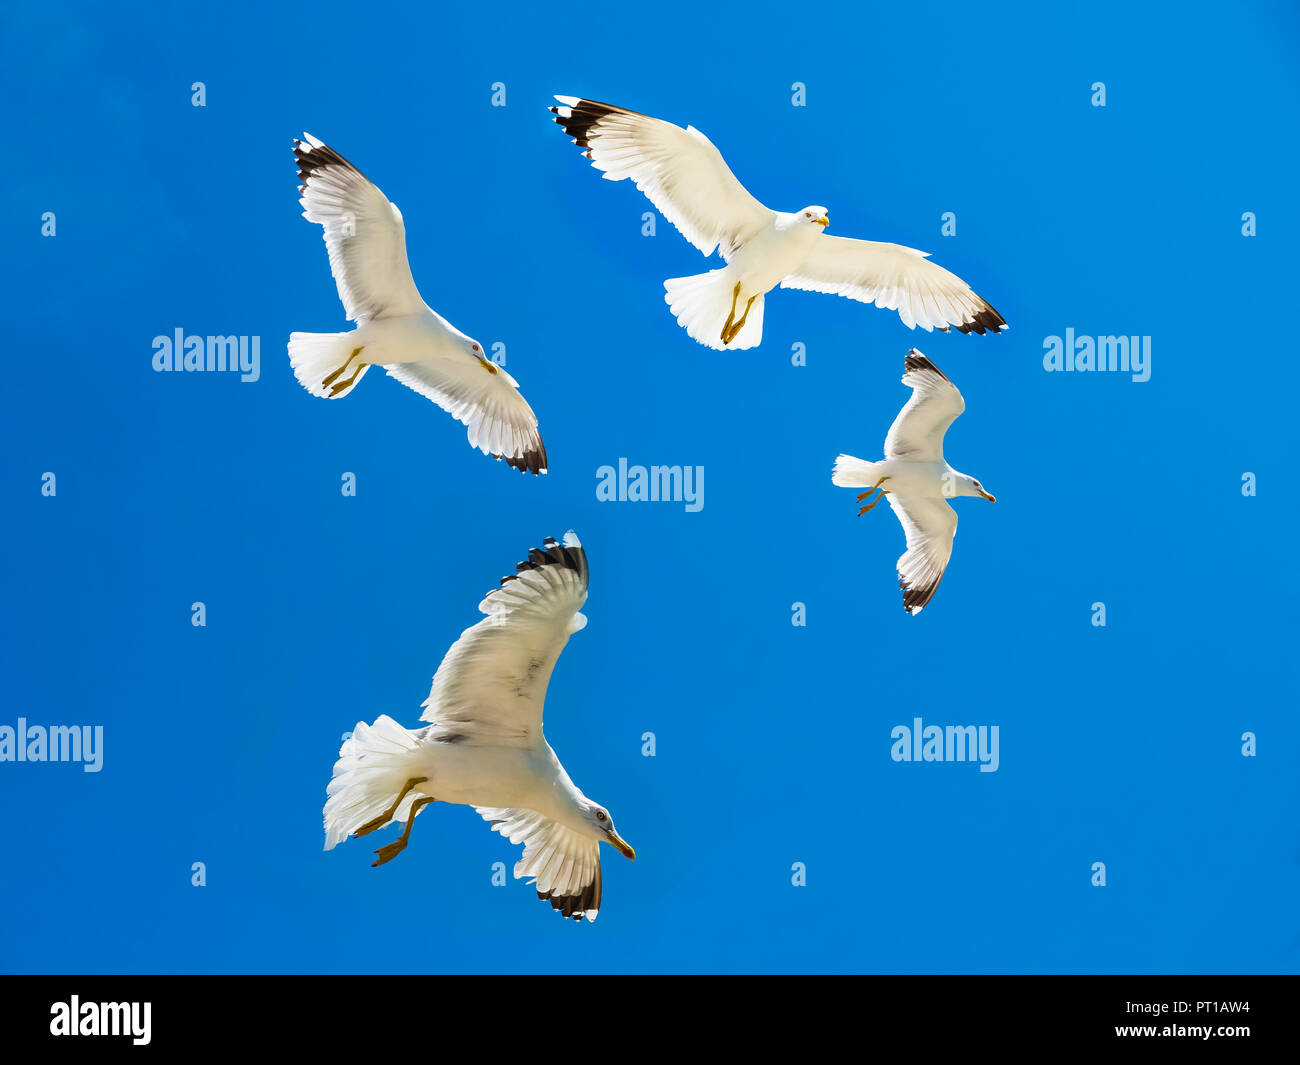 Four herring gull flying in front of blue sky Stock Photo